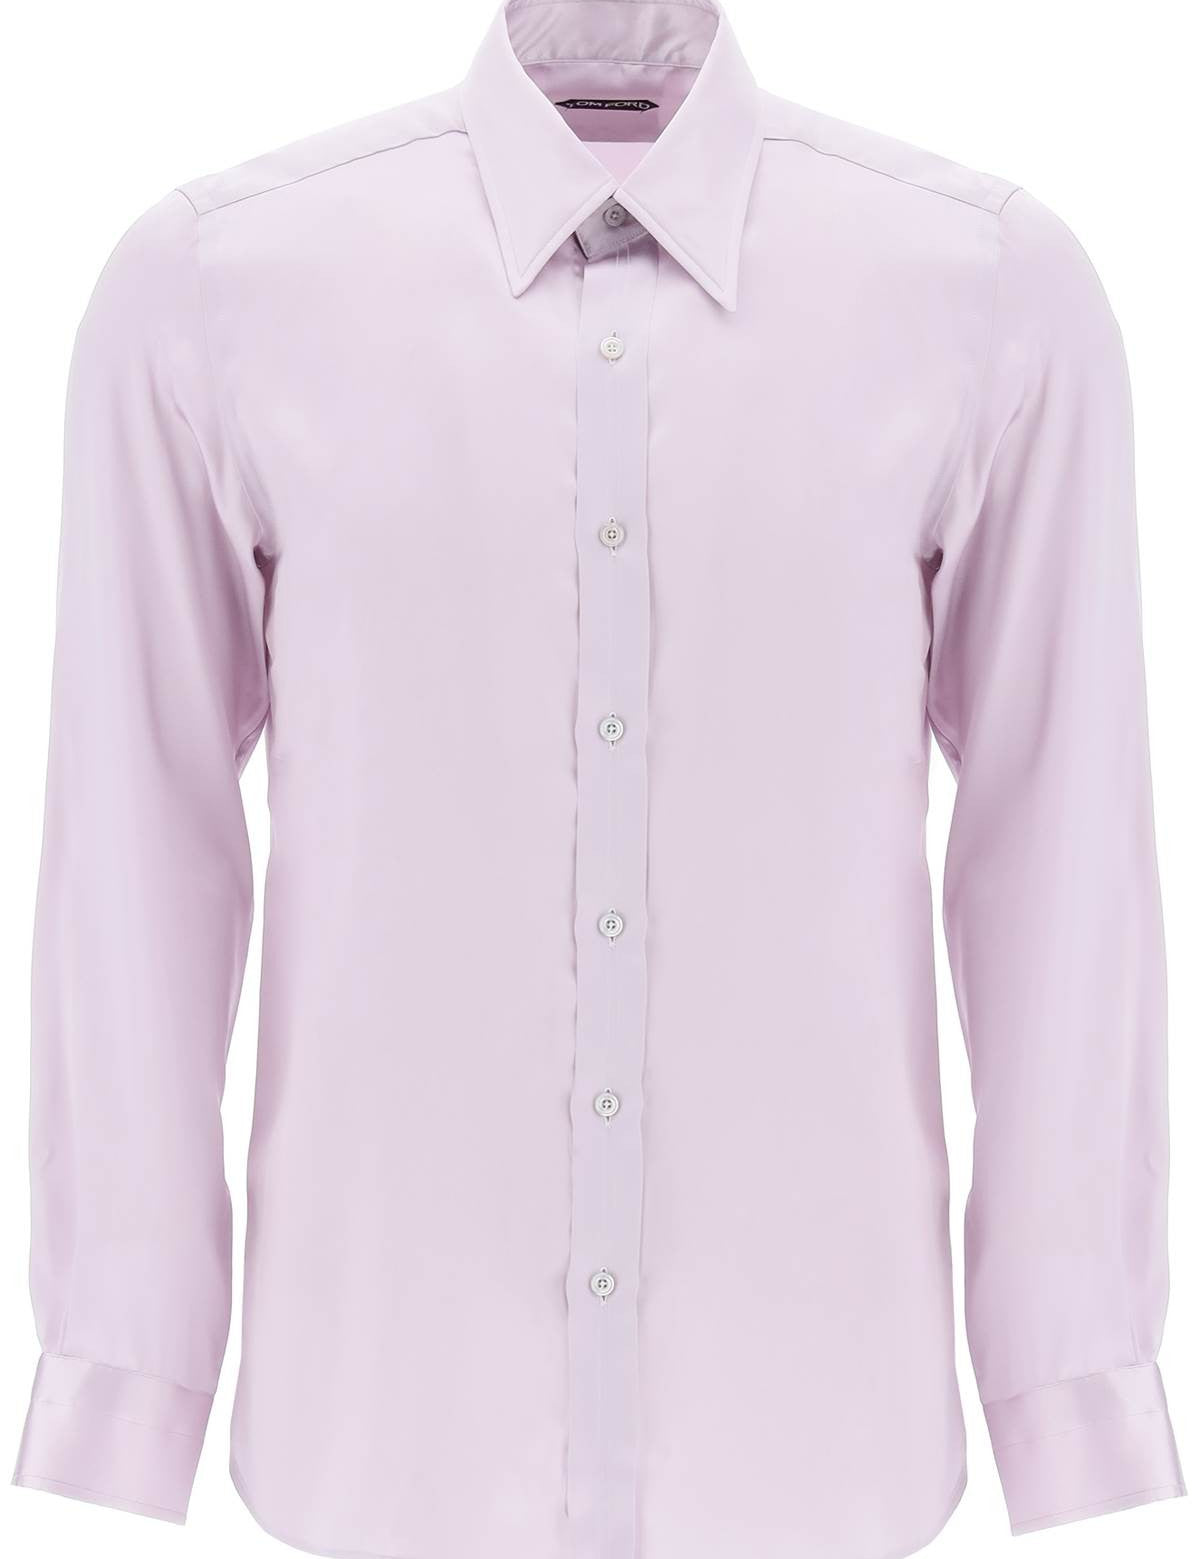 silk-charmeuse-blouse-shirt.jpg